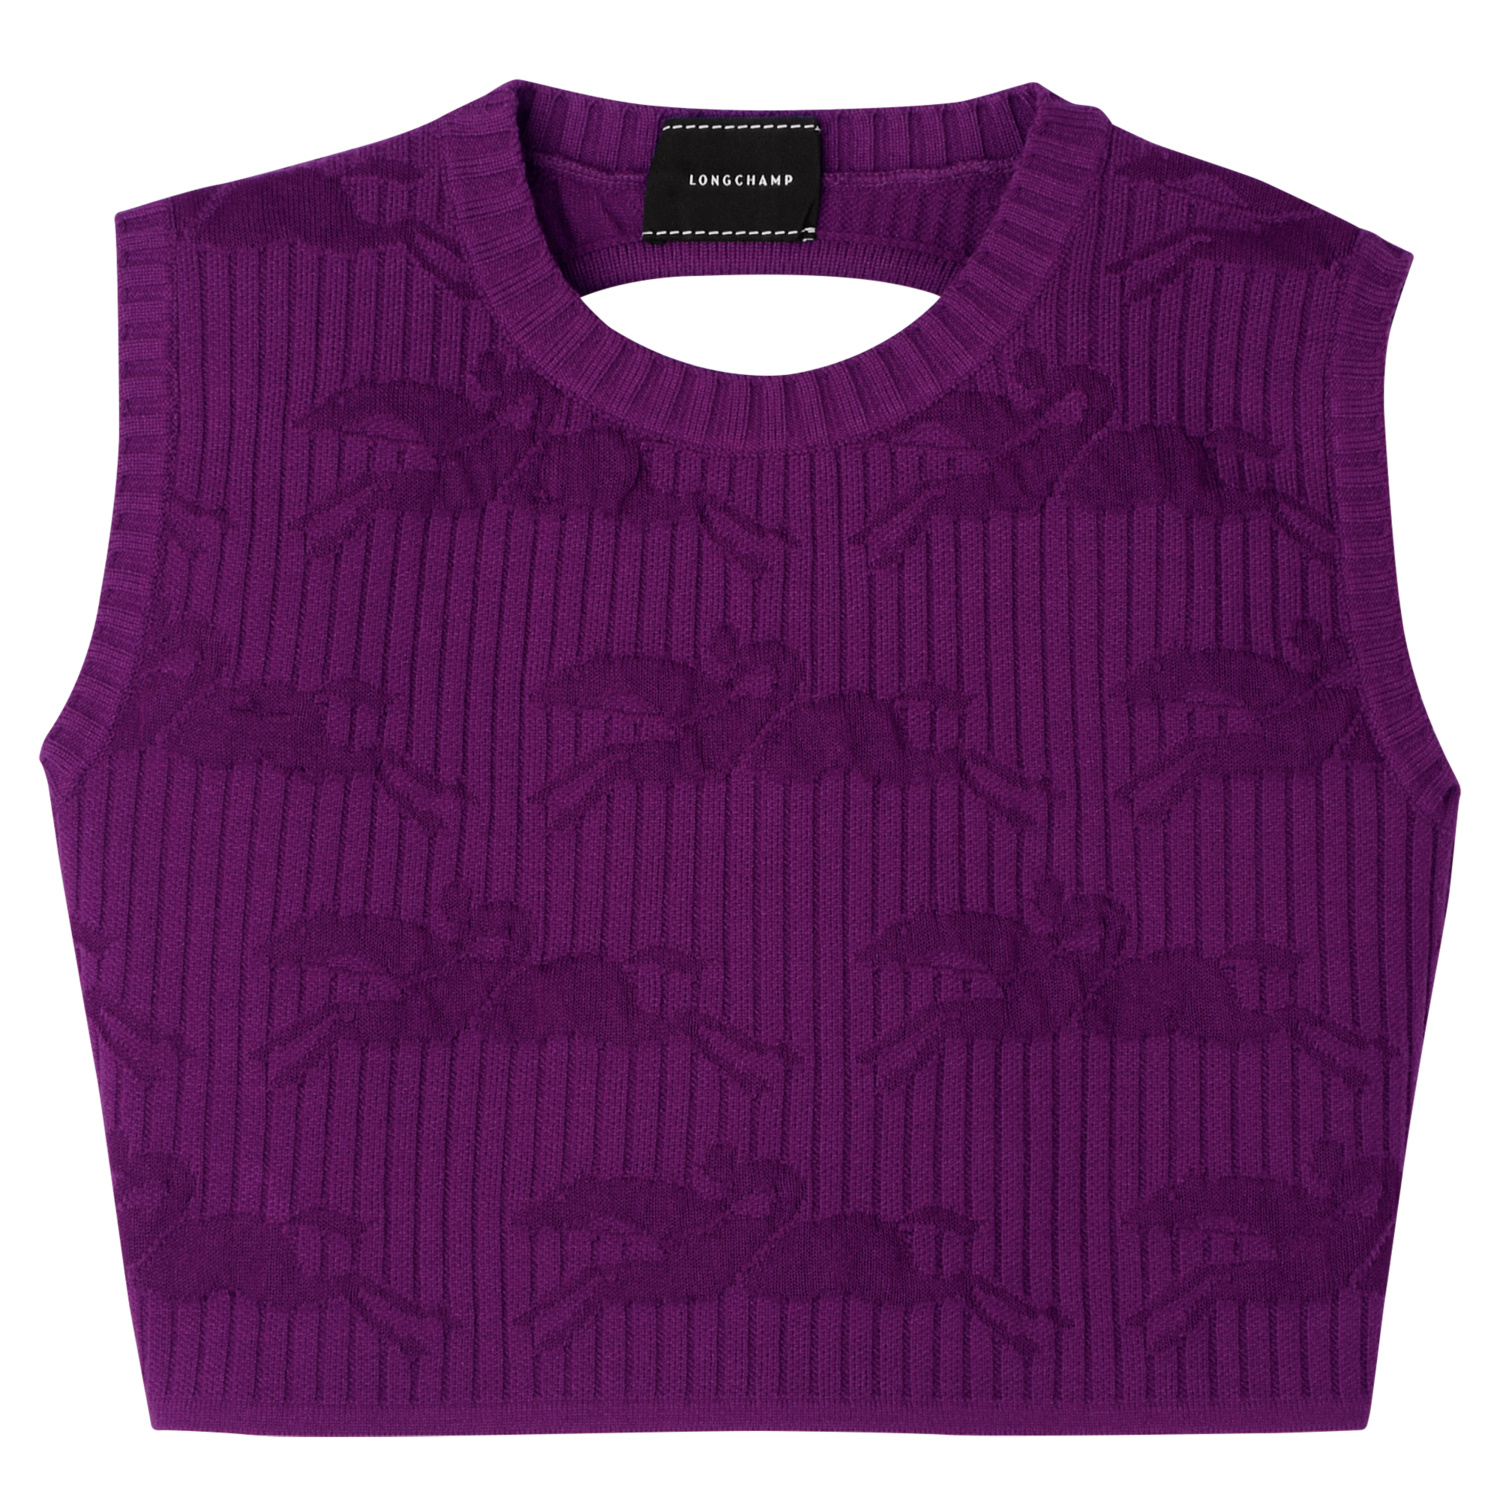 Longchamp Sleeveless Top In Violet